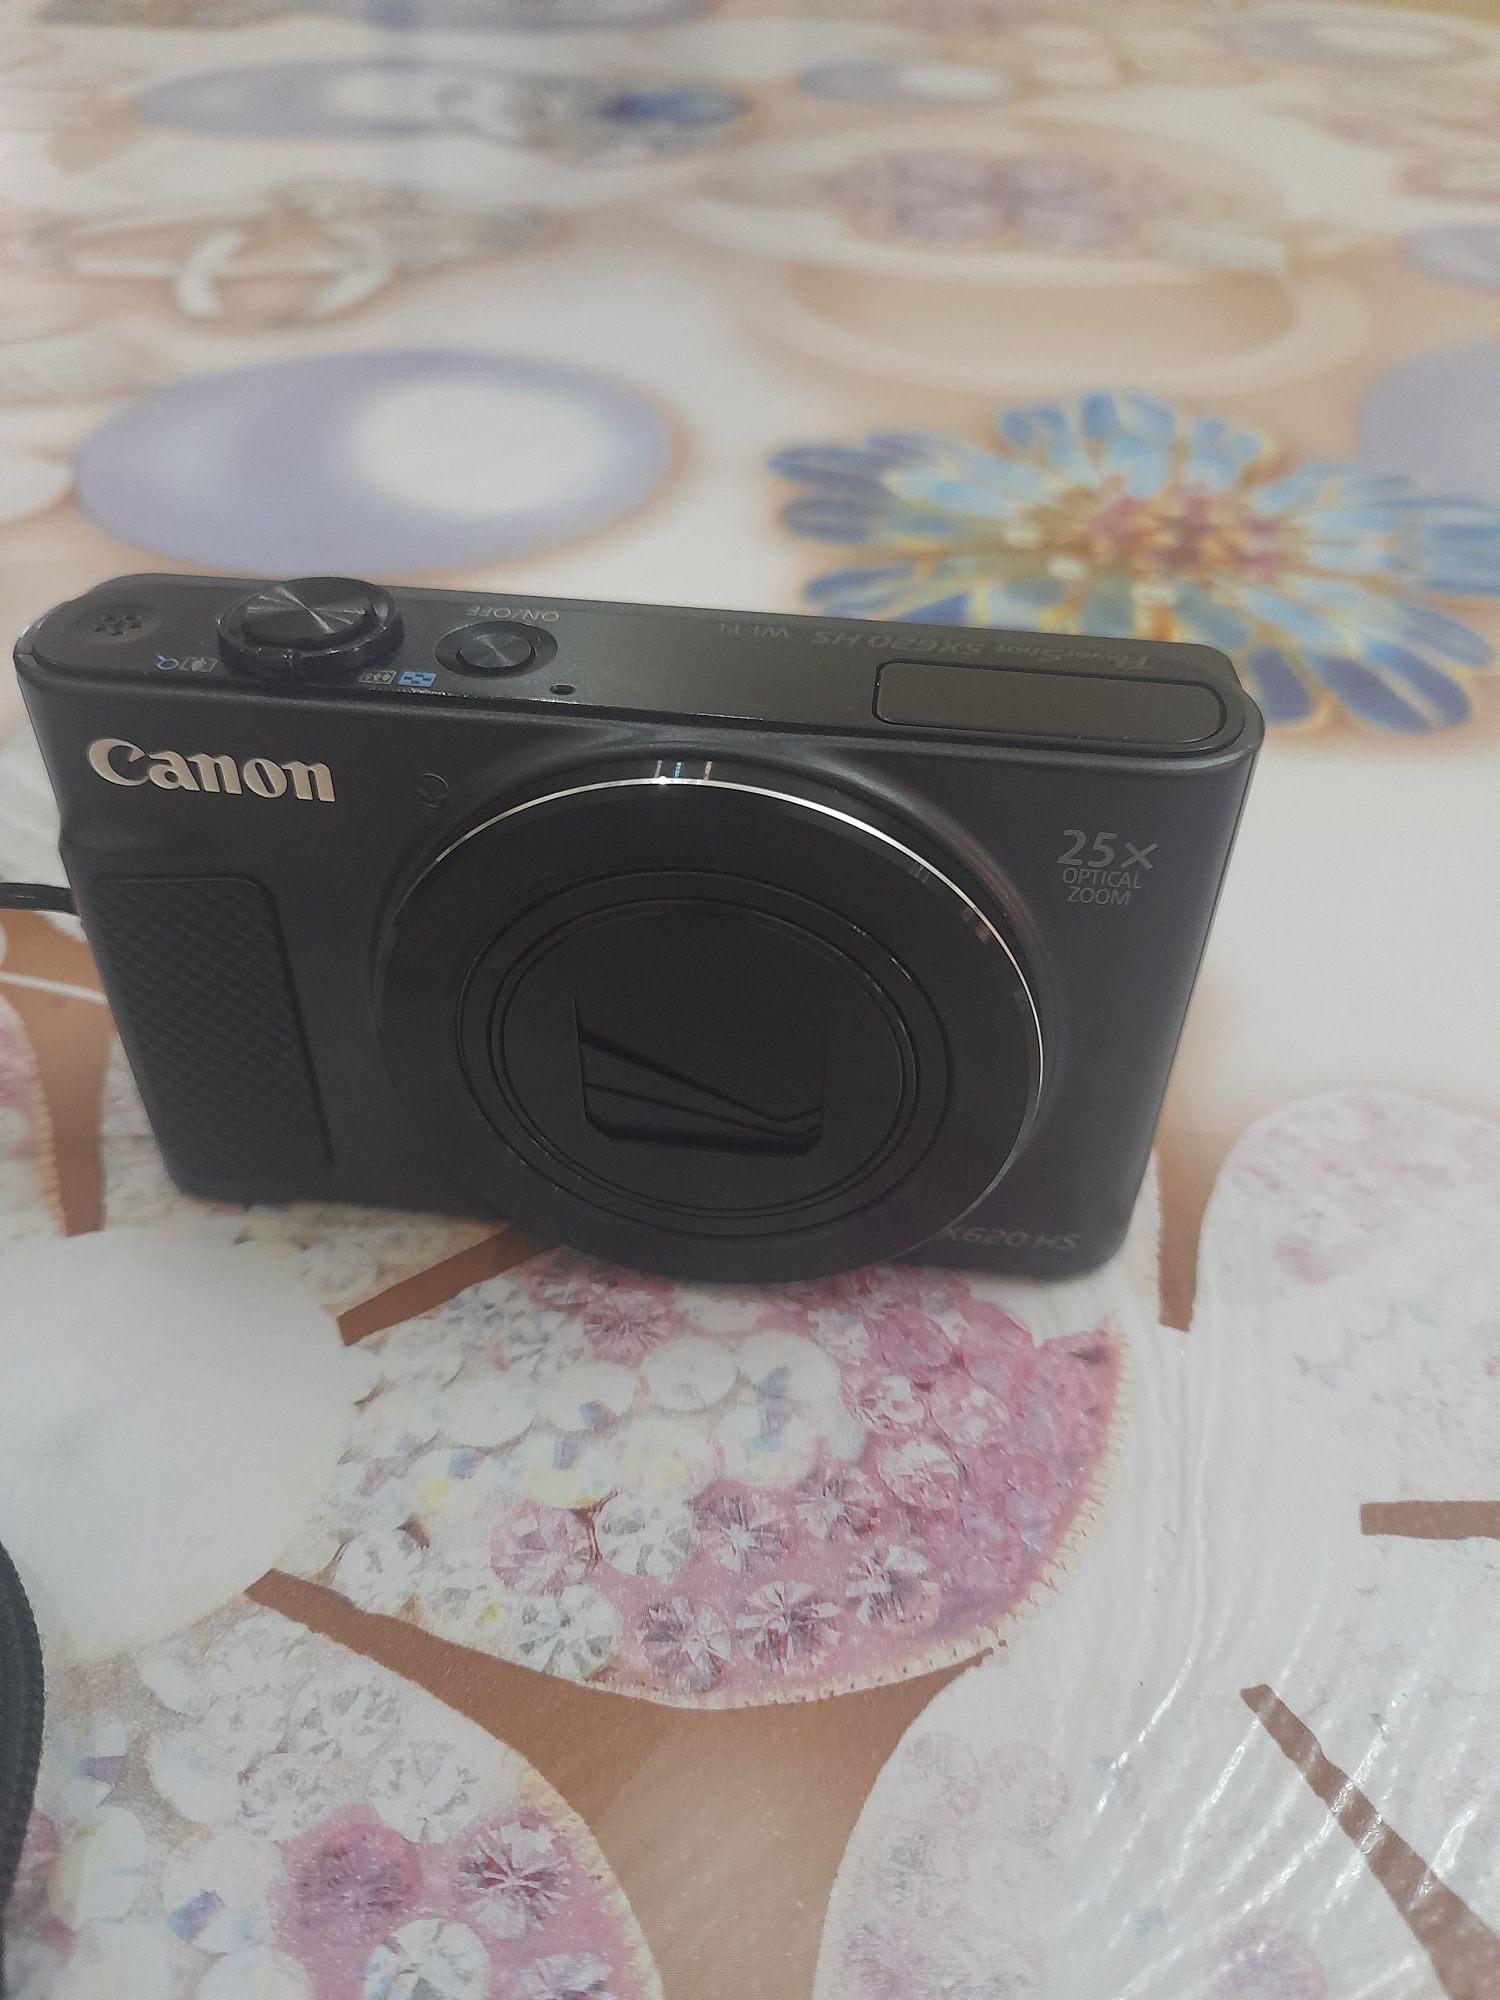 Canon sx620 hs chõtkiy camera